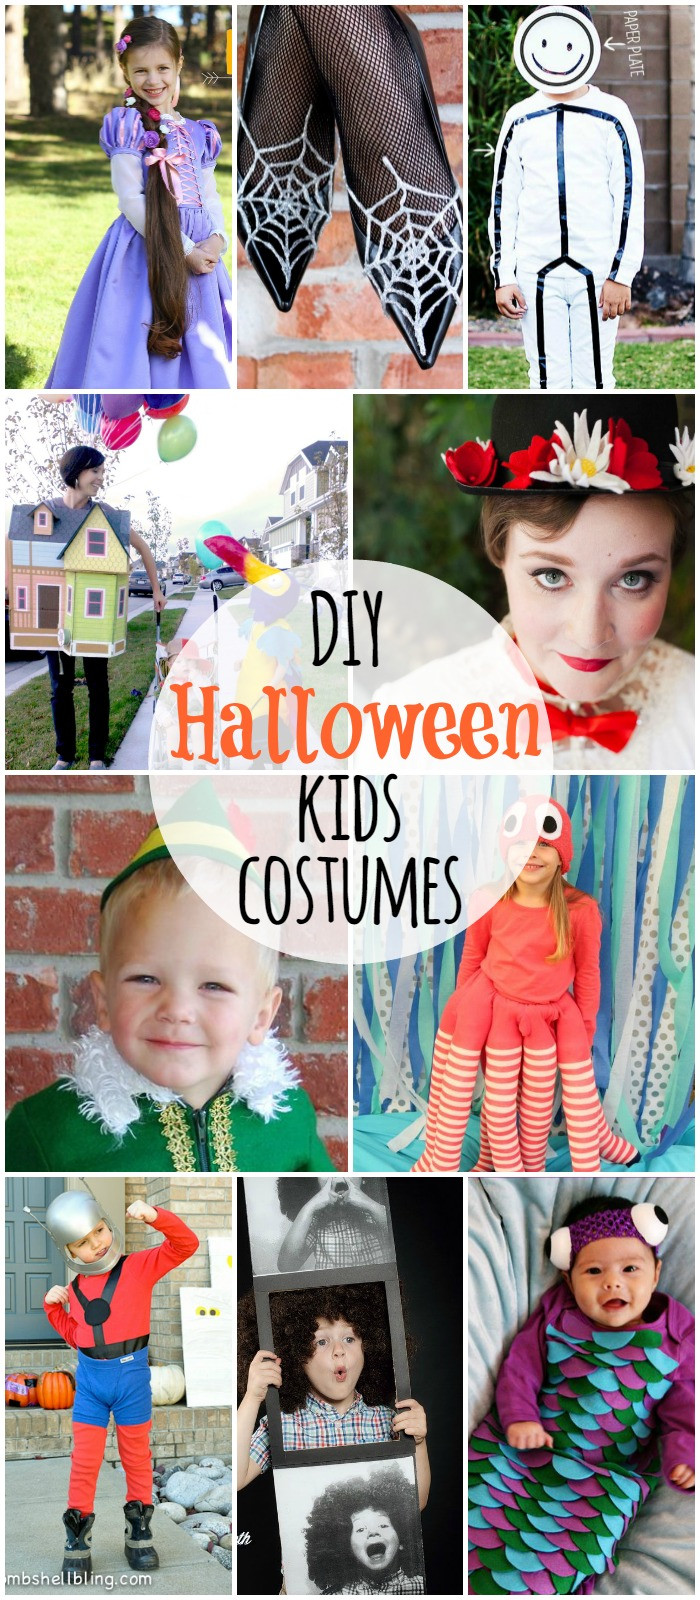 Best ideas about DIY Halloween Costumes Kids
. Save or Pin DIY Halloween Kids Costumes Now.